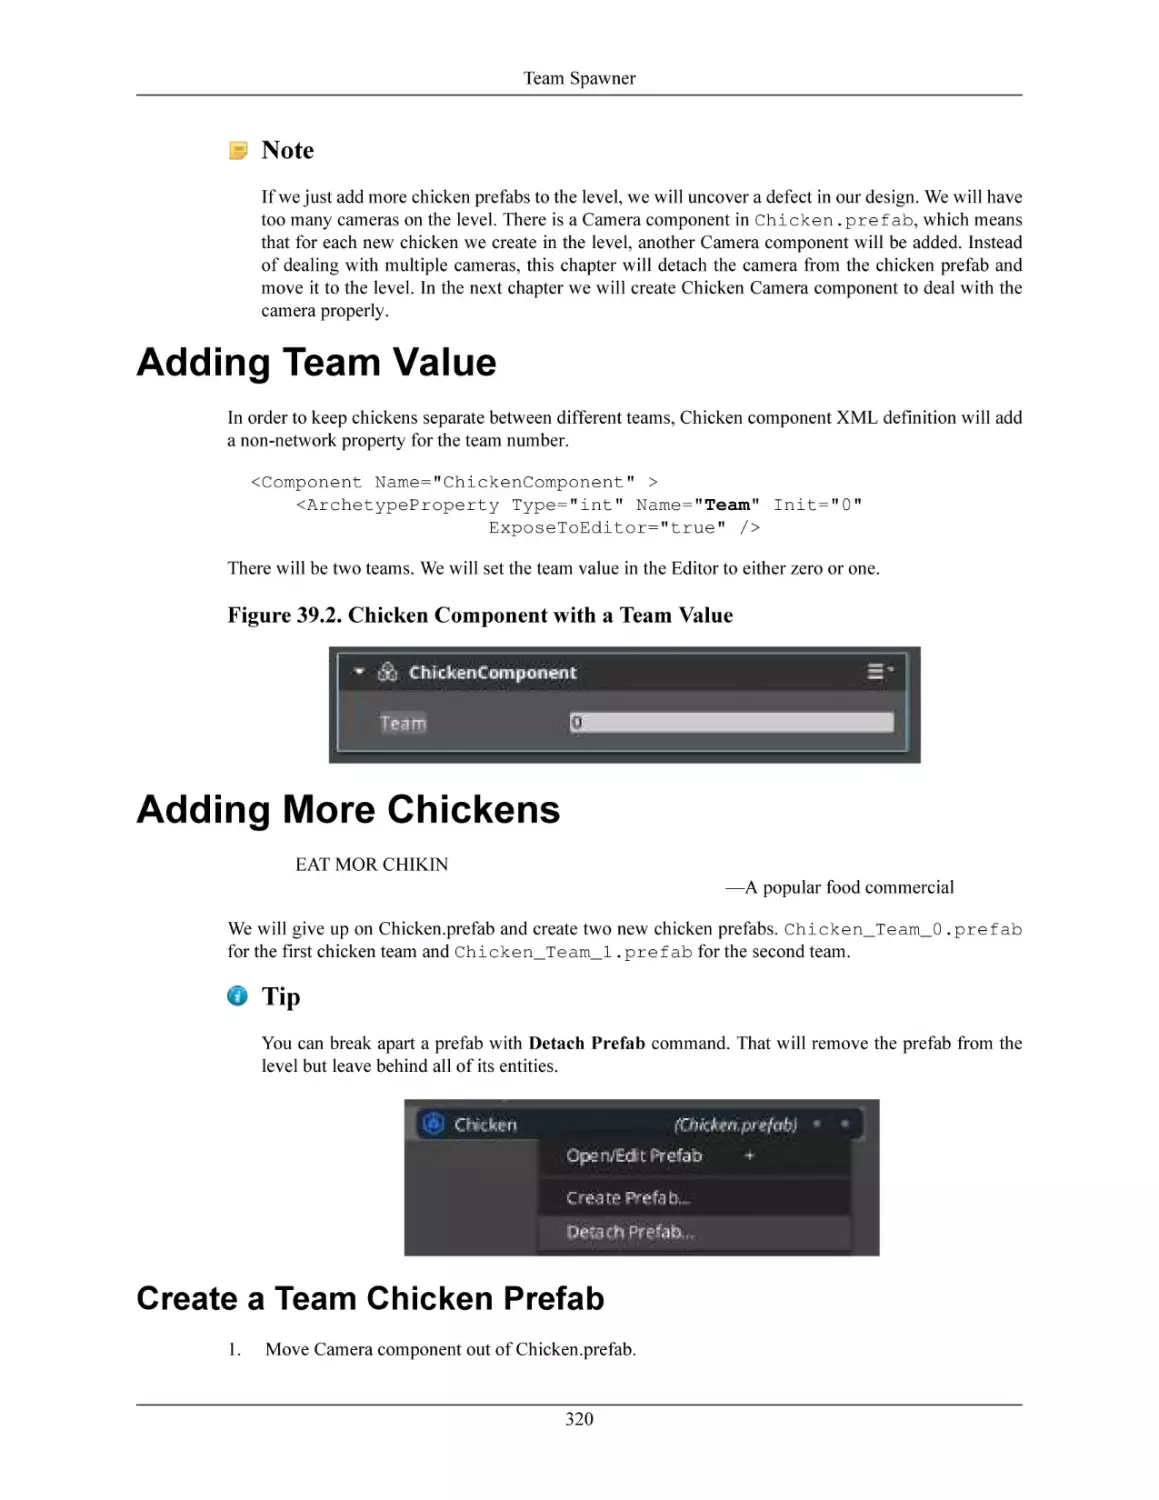 Adding Team Value
Adding More Chickens
Create a Team Chicken Prefab